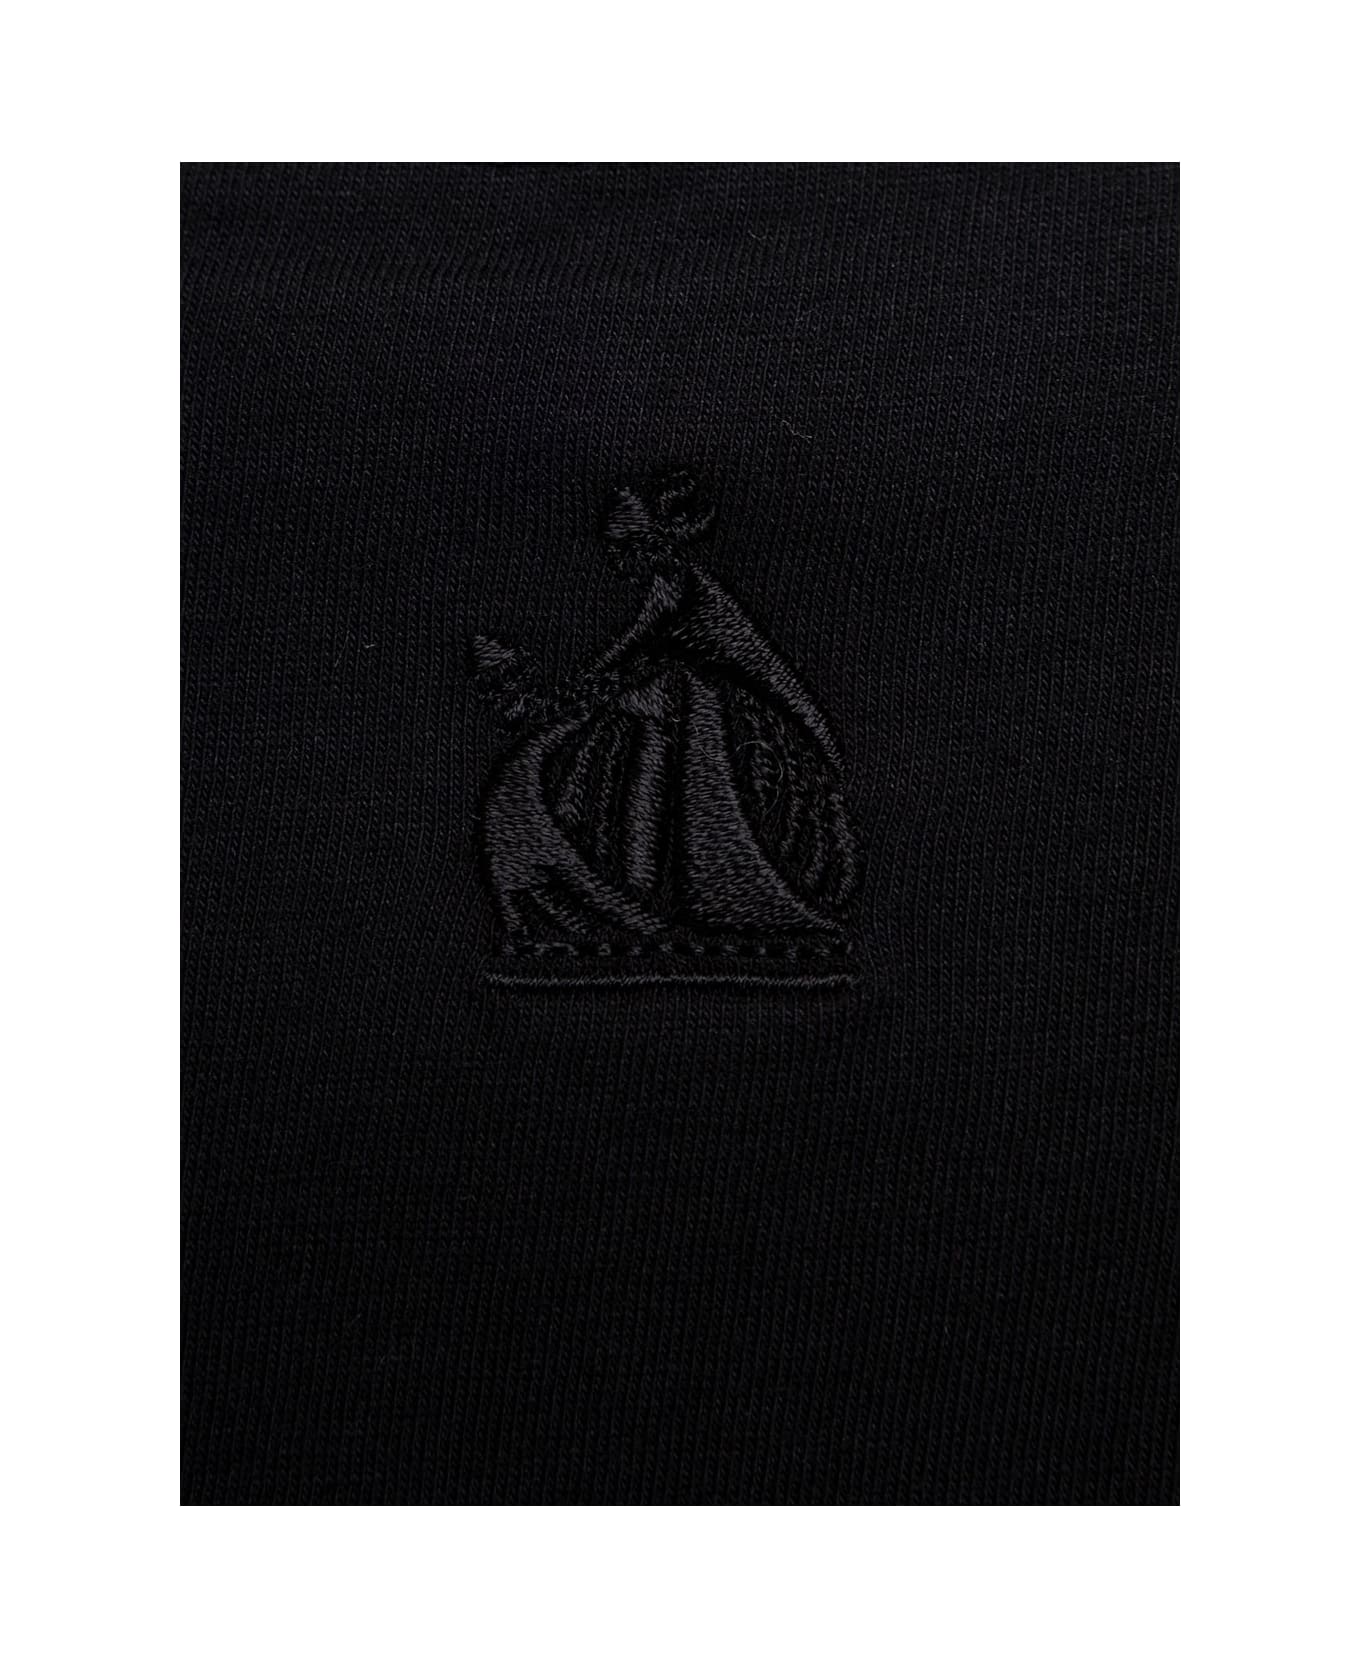 Lanvin Logo T-shirt - Black